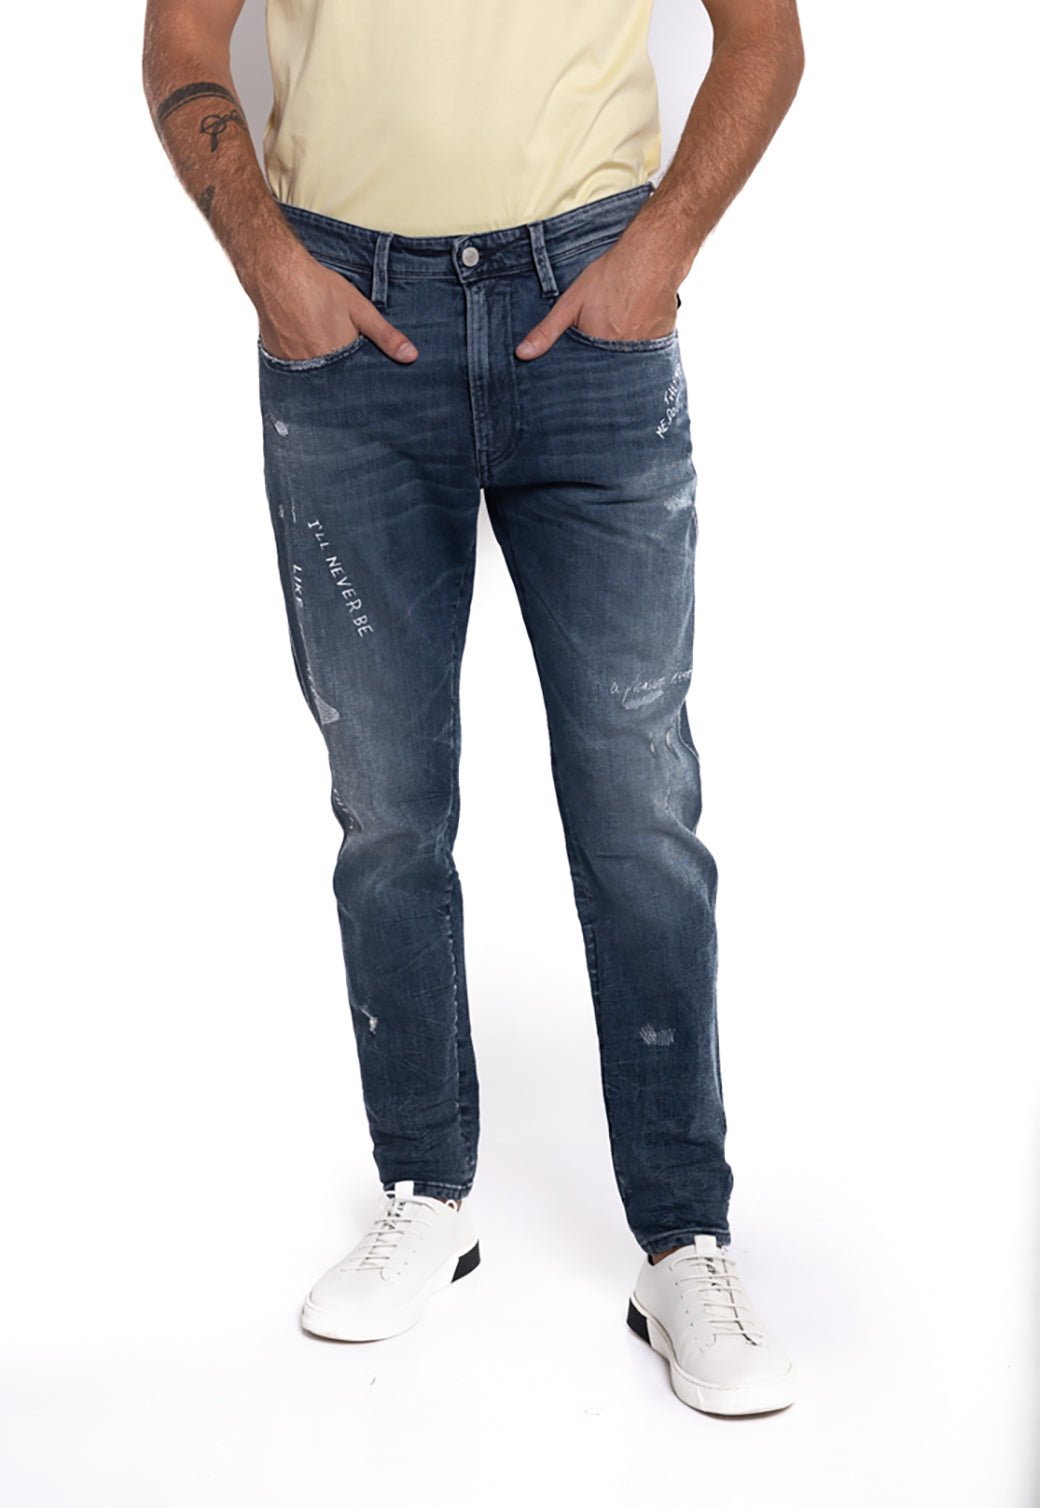 ג'ינס | גברים - Replay